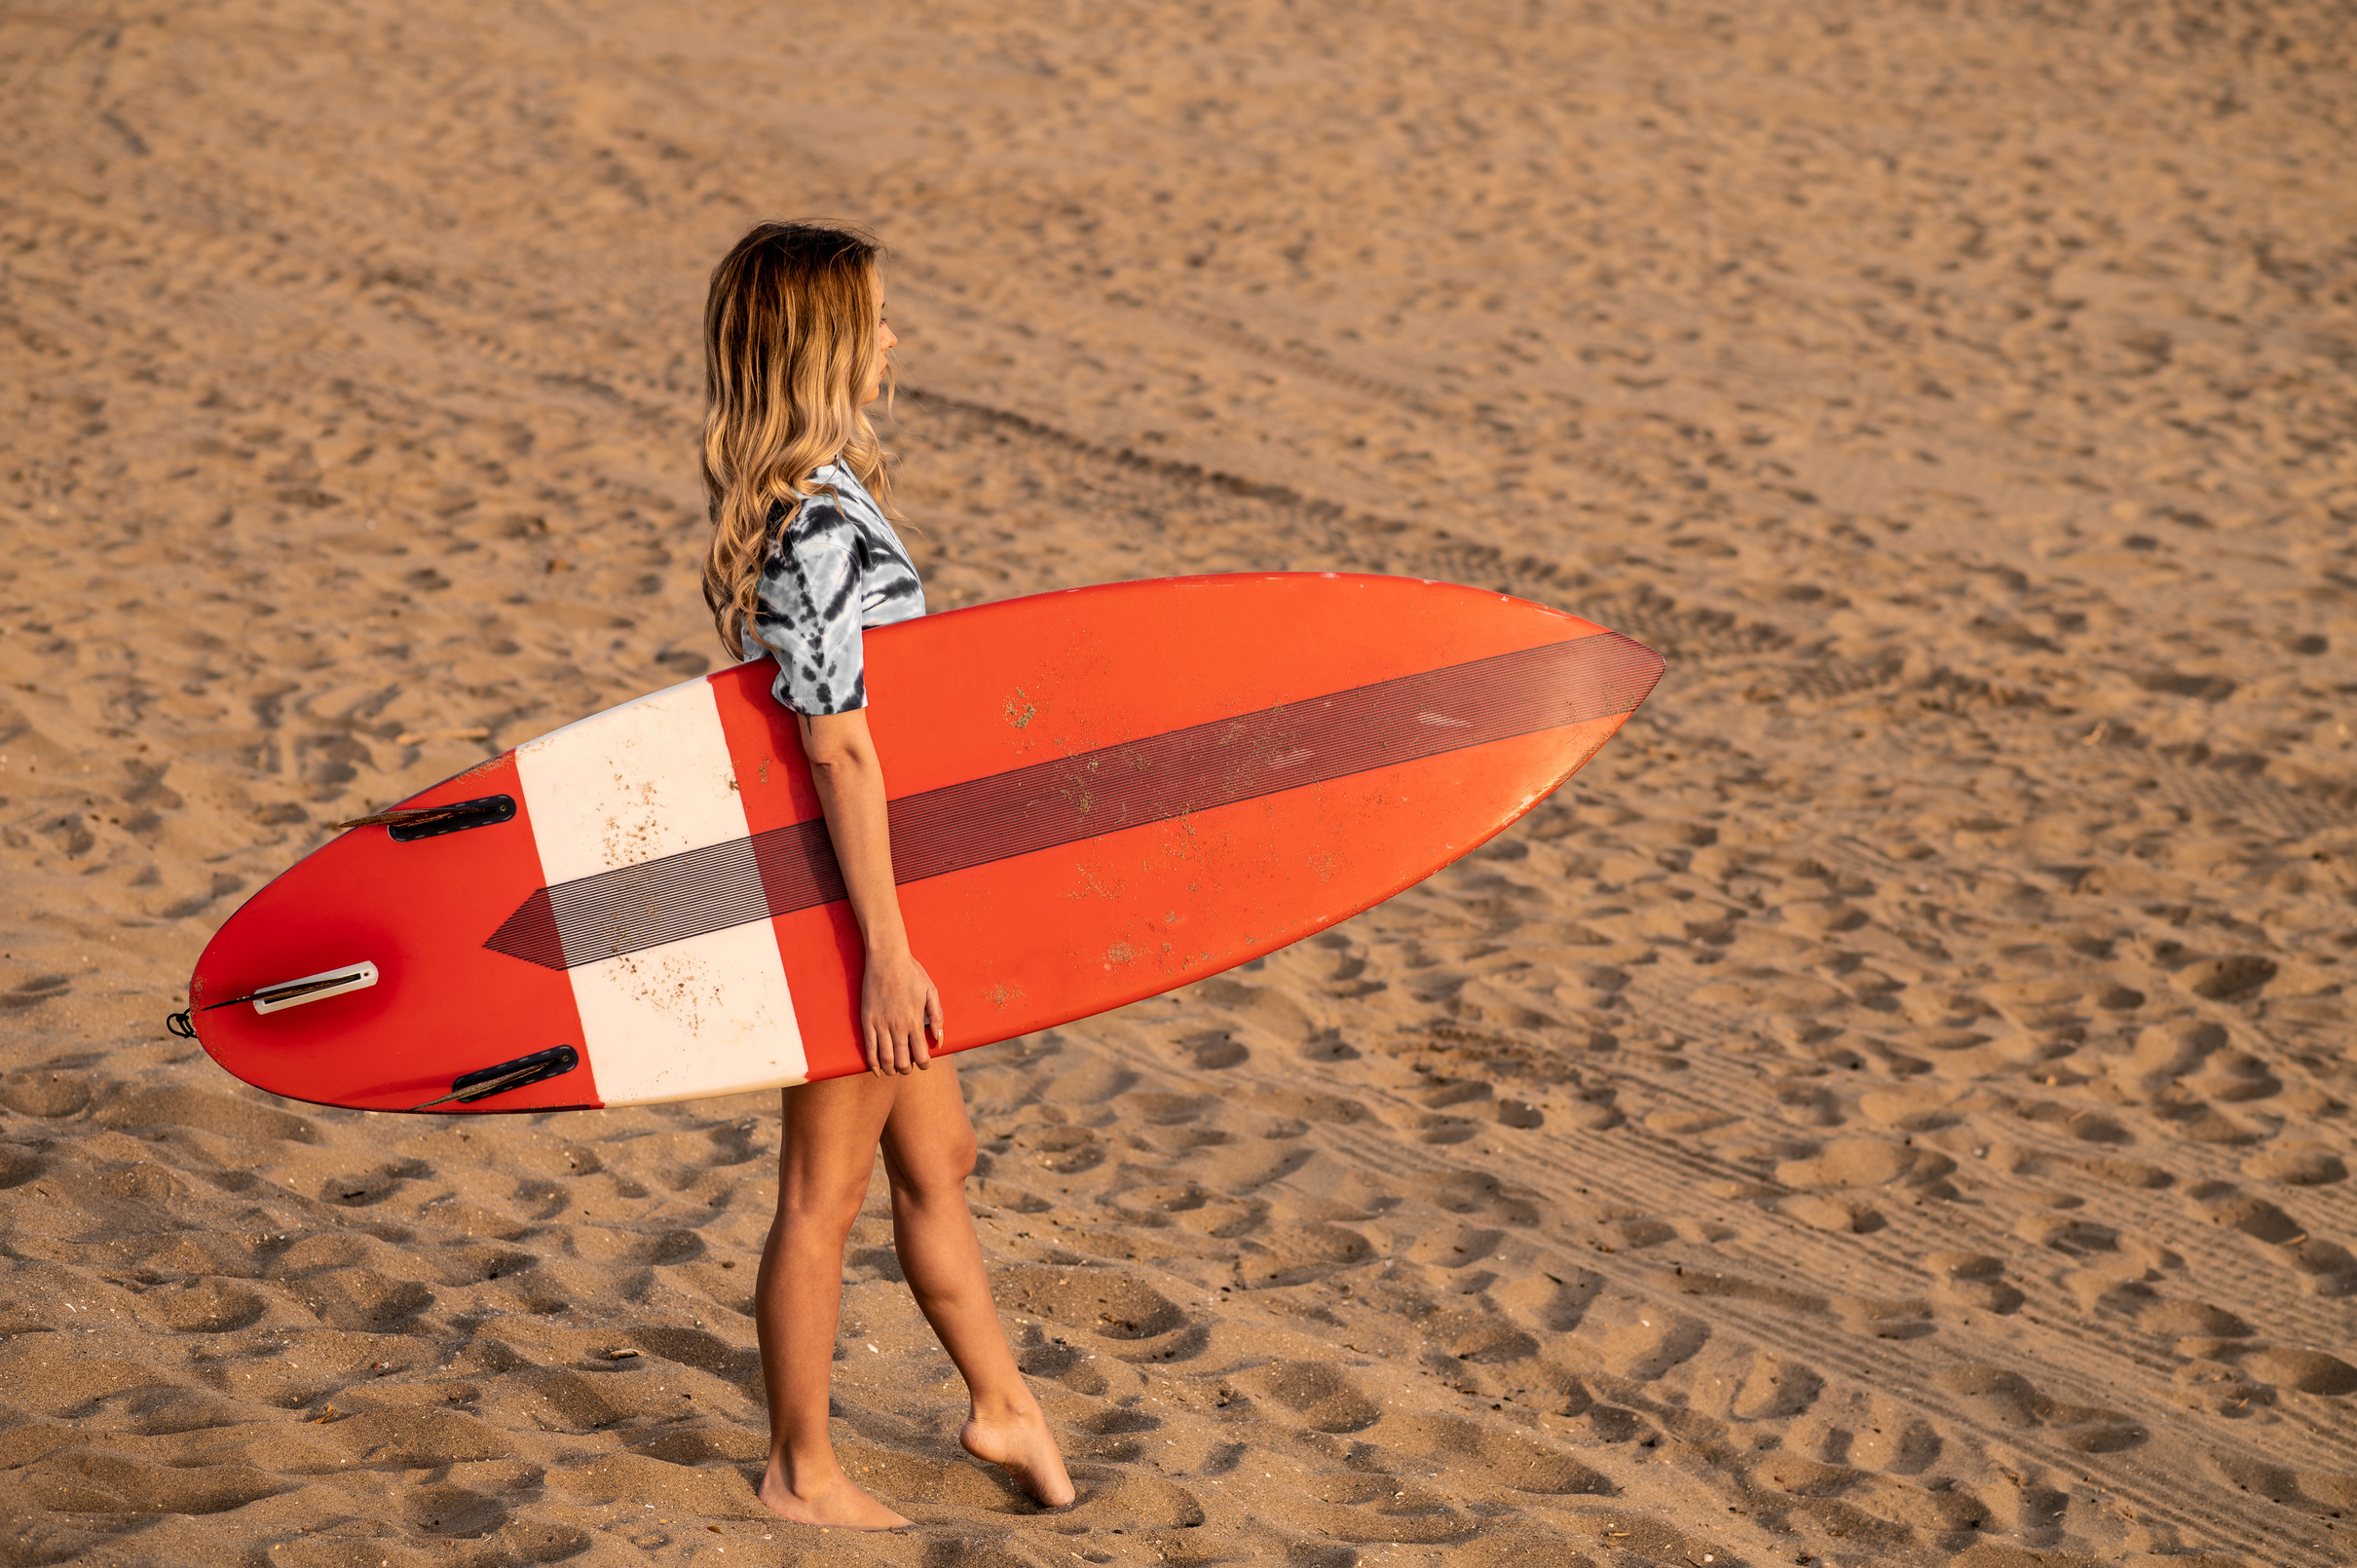 Female Surfer on the Beach